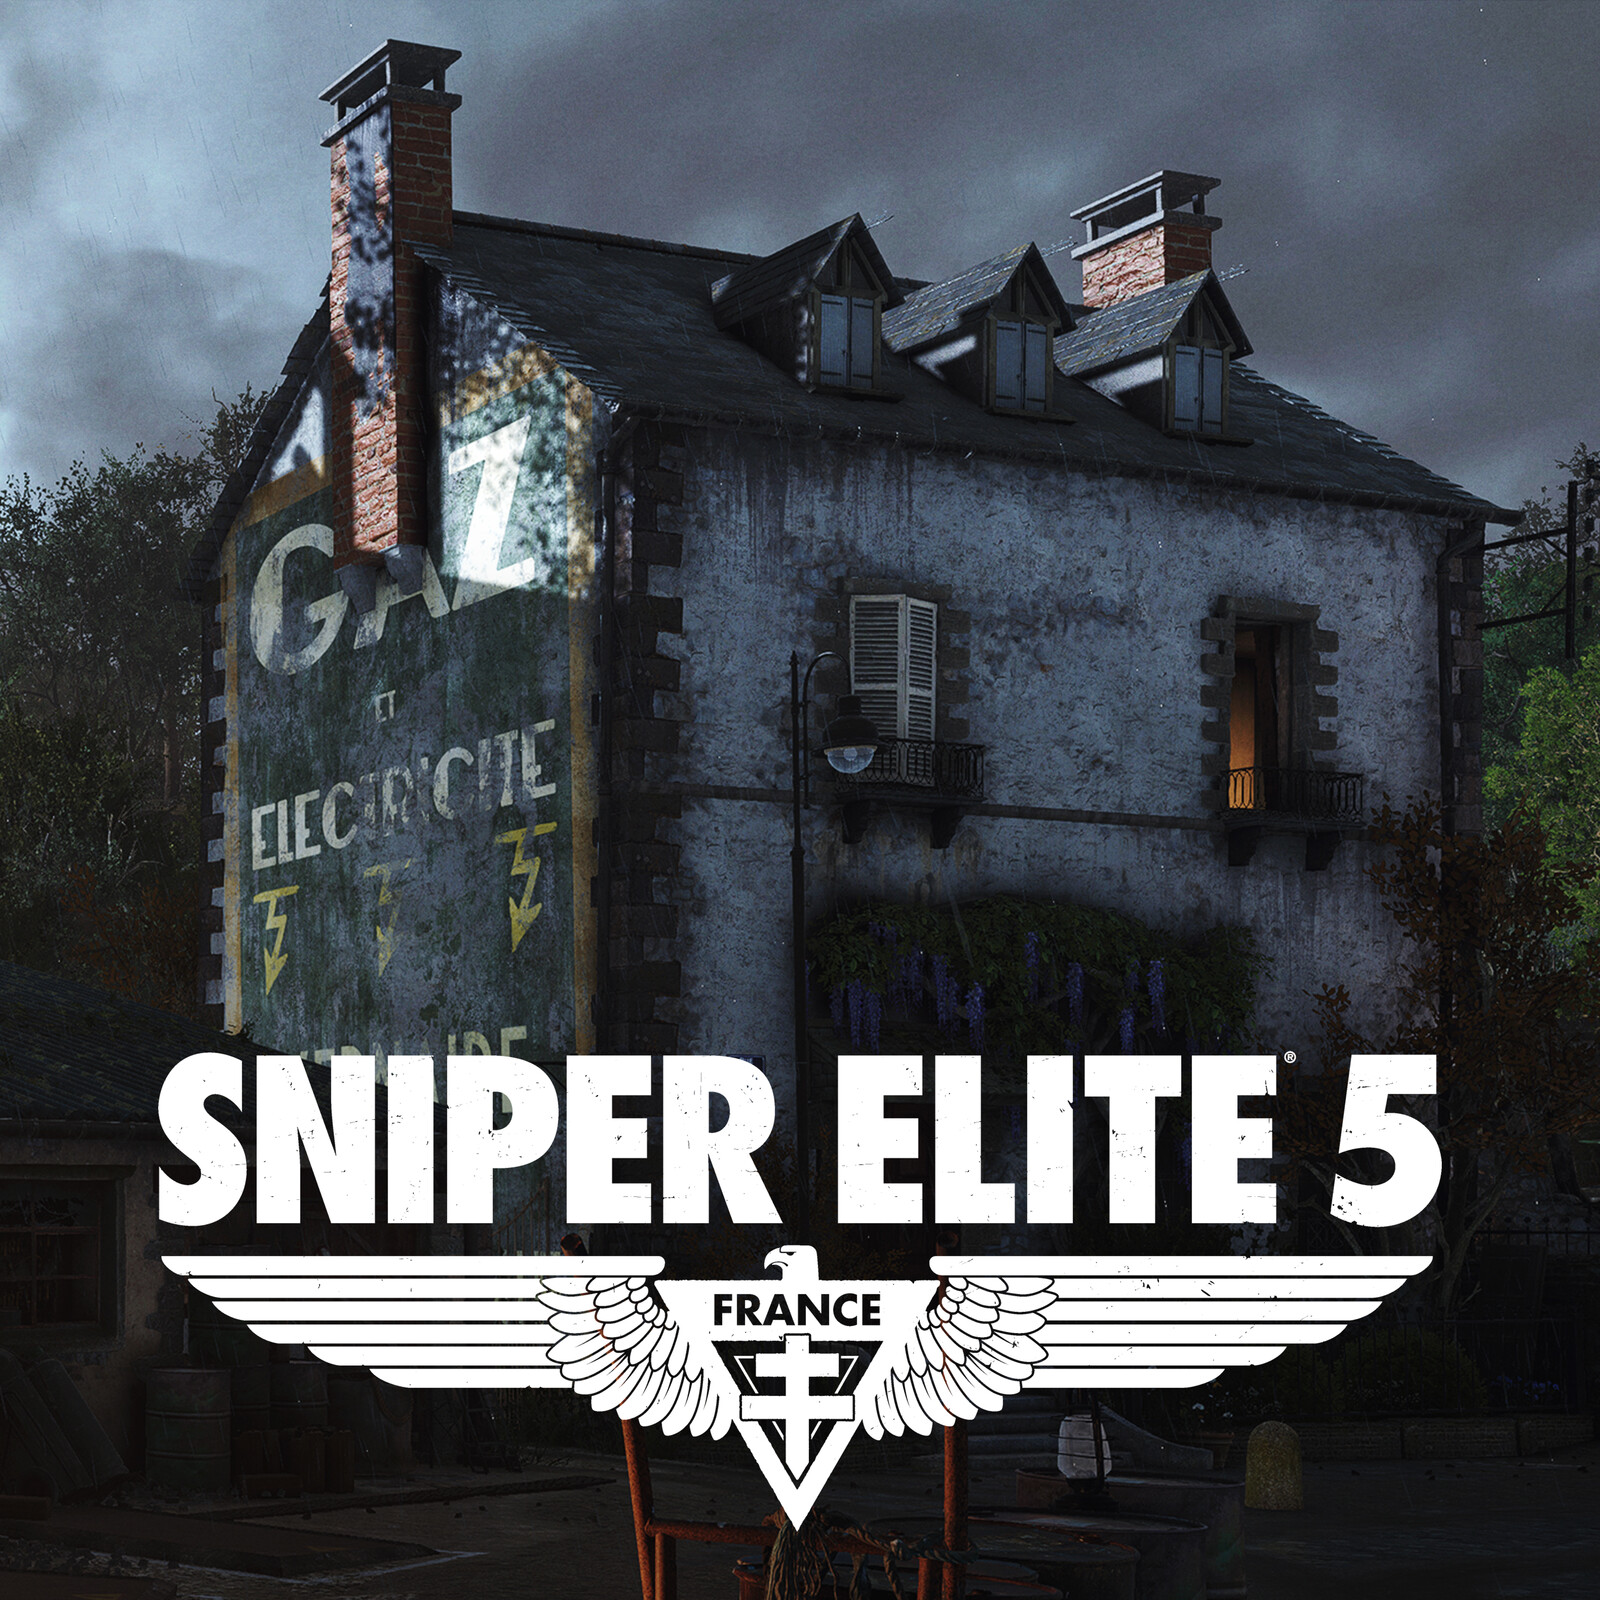 Residential - Sniper Elite 5 - The Atlantic Wall